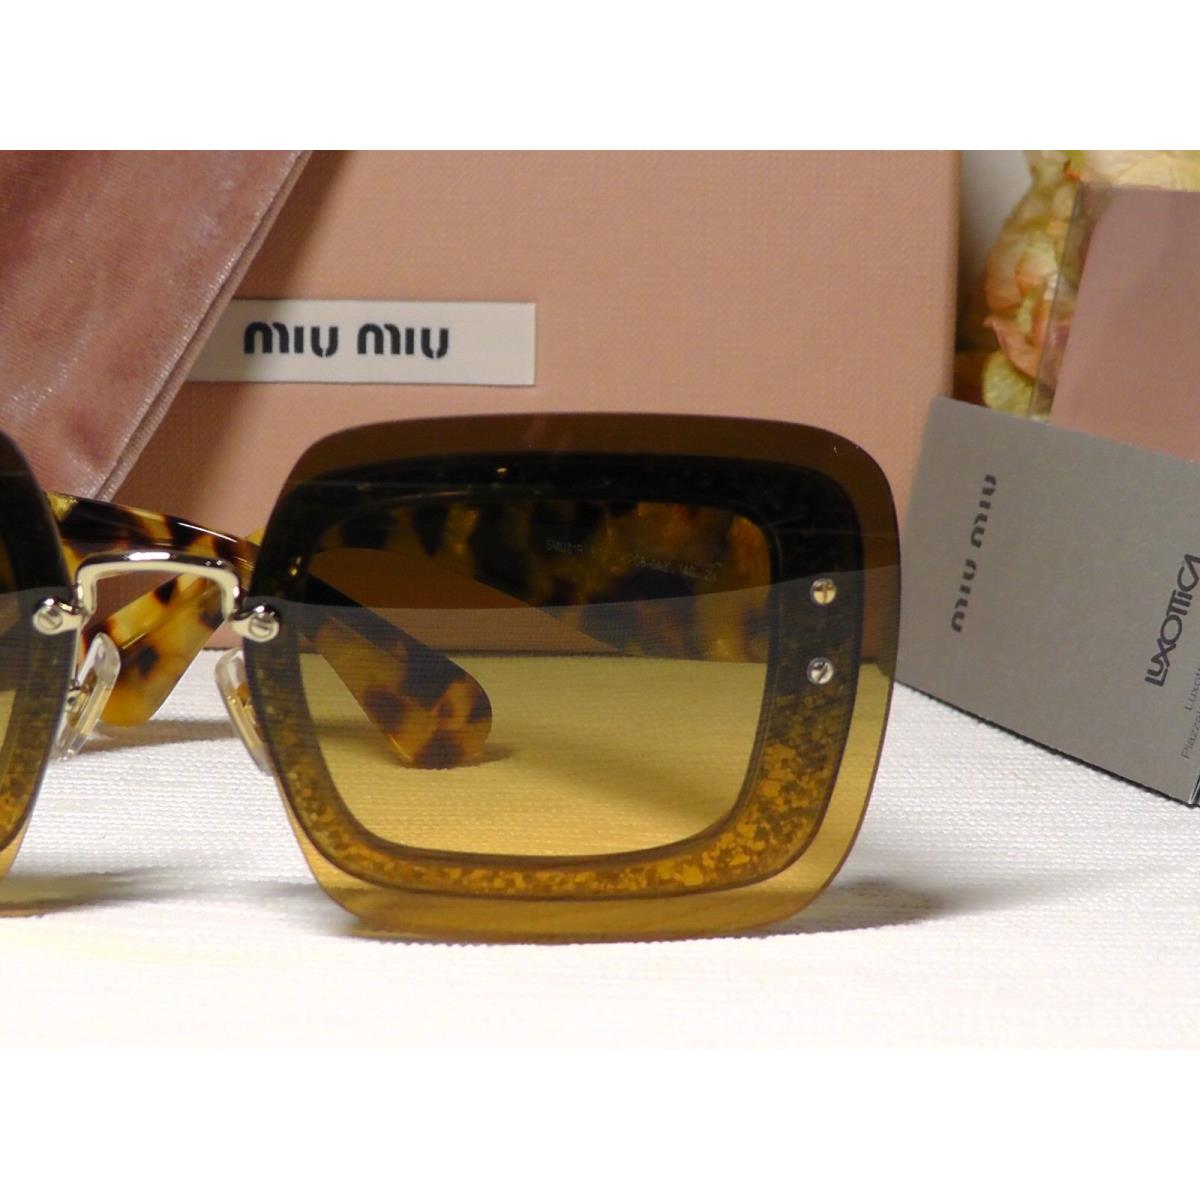 Miu Miu sunglasses  - Light Havana Frame, Gray / Yellow Lens 1